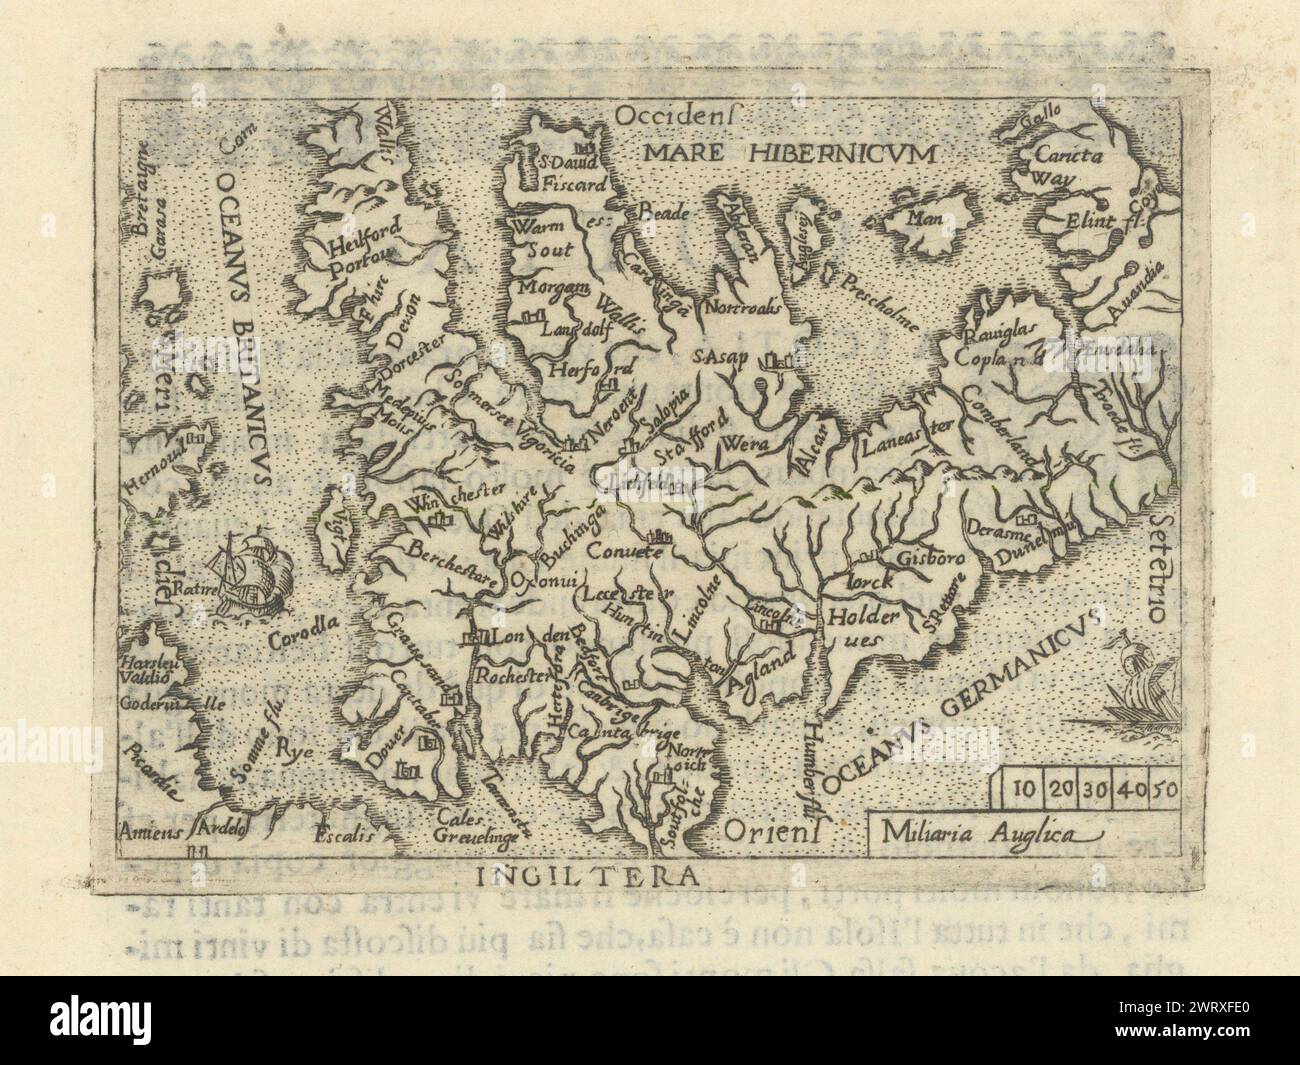 Ingiltera by Pietro Maria Marchetti after Ortelius/Galle. Great Britain 1598 map Stock Photo